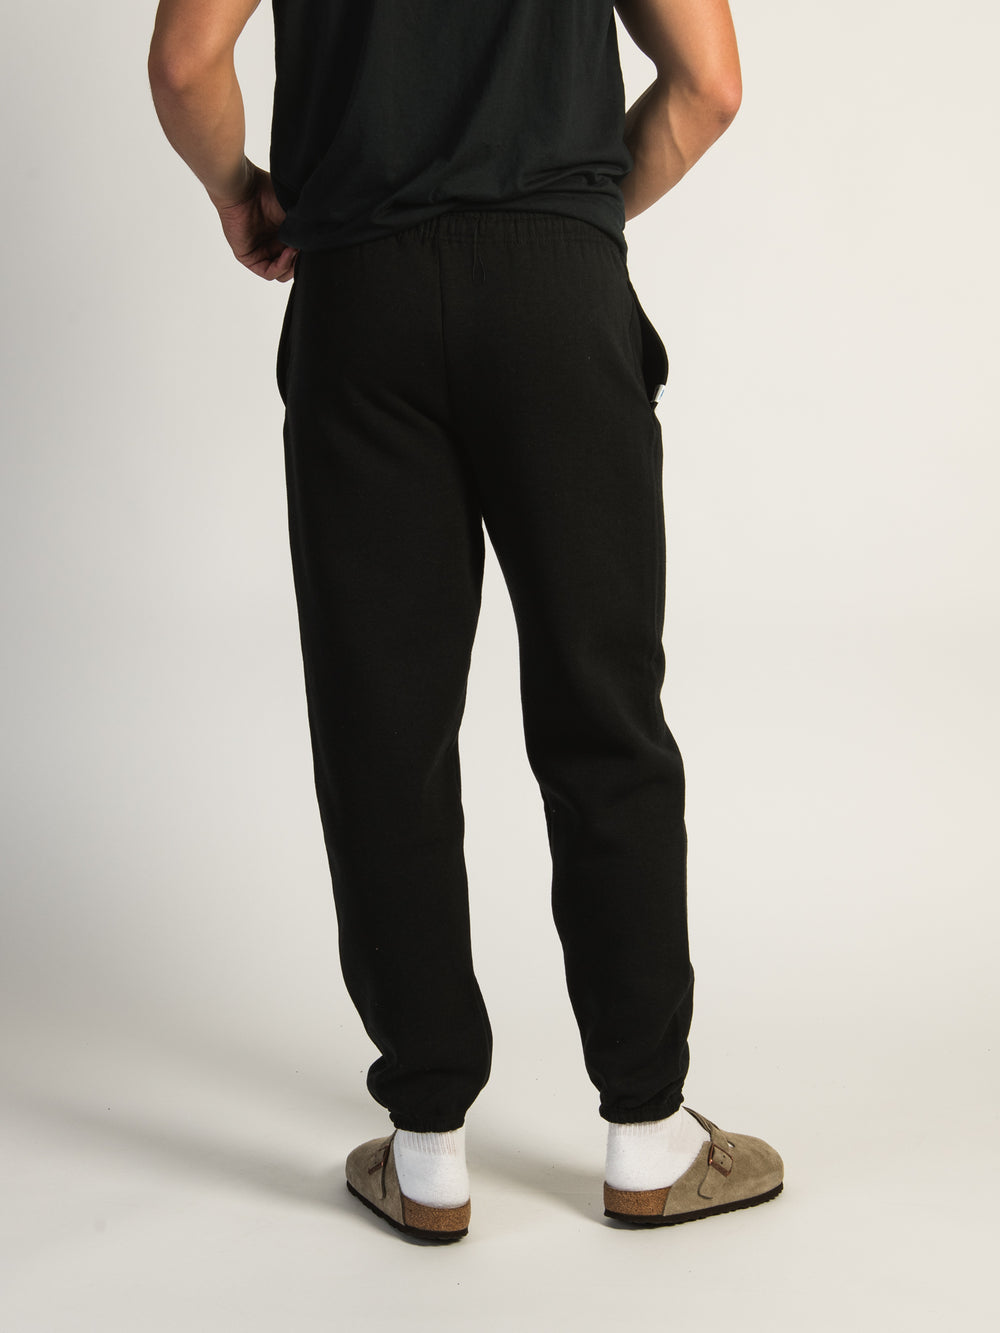 Texas longhorn Jogger sweatpants elastic waistband with side